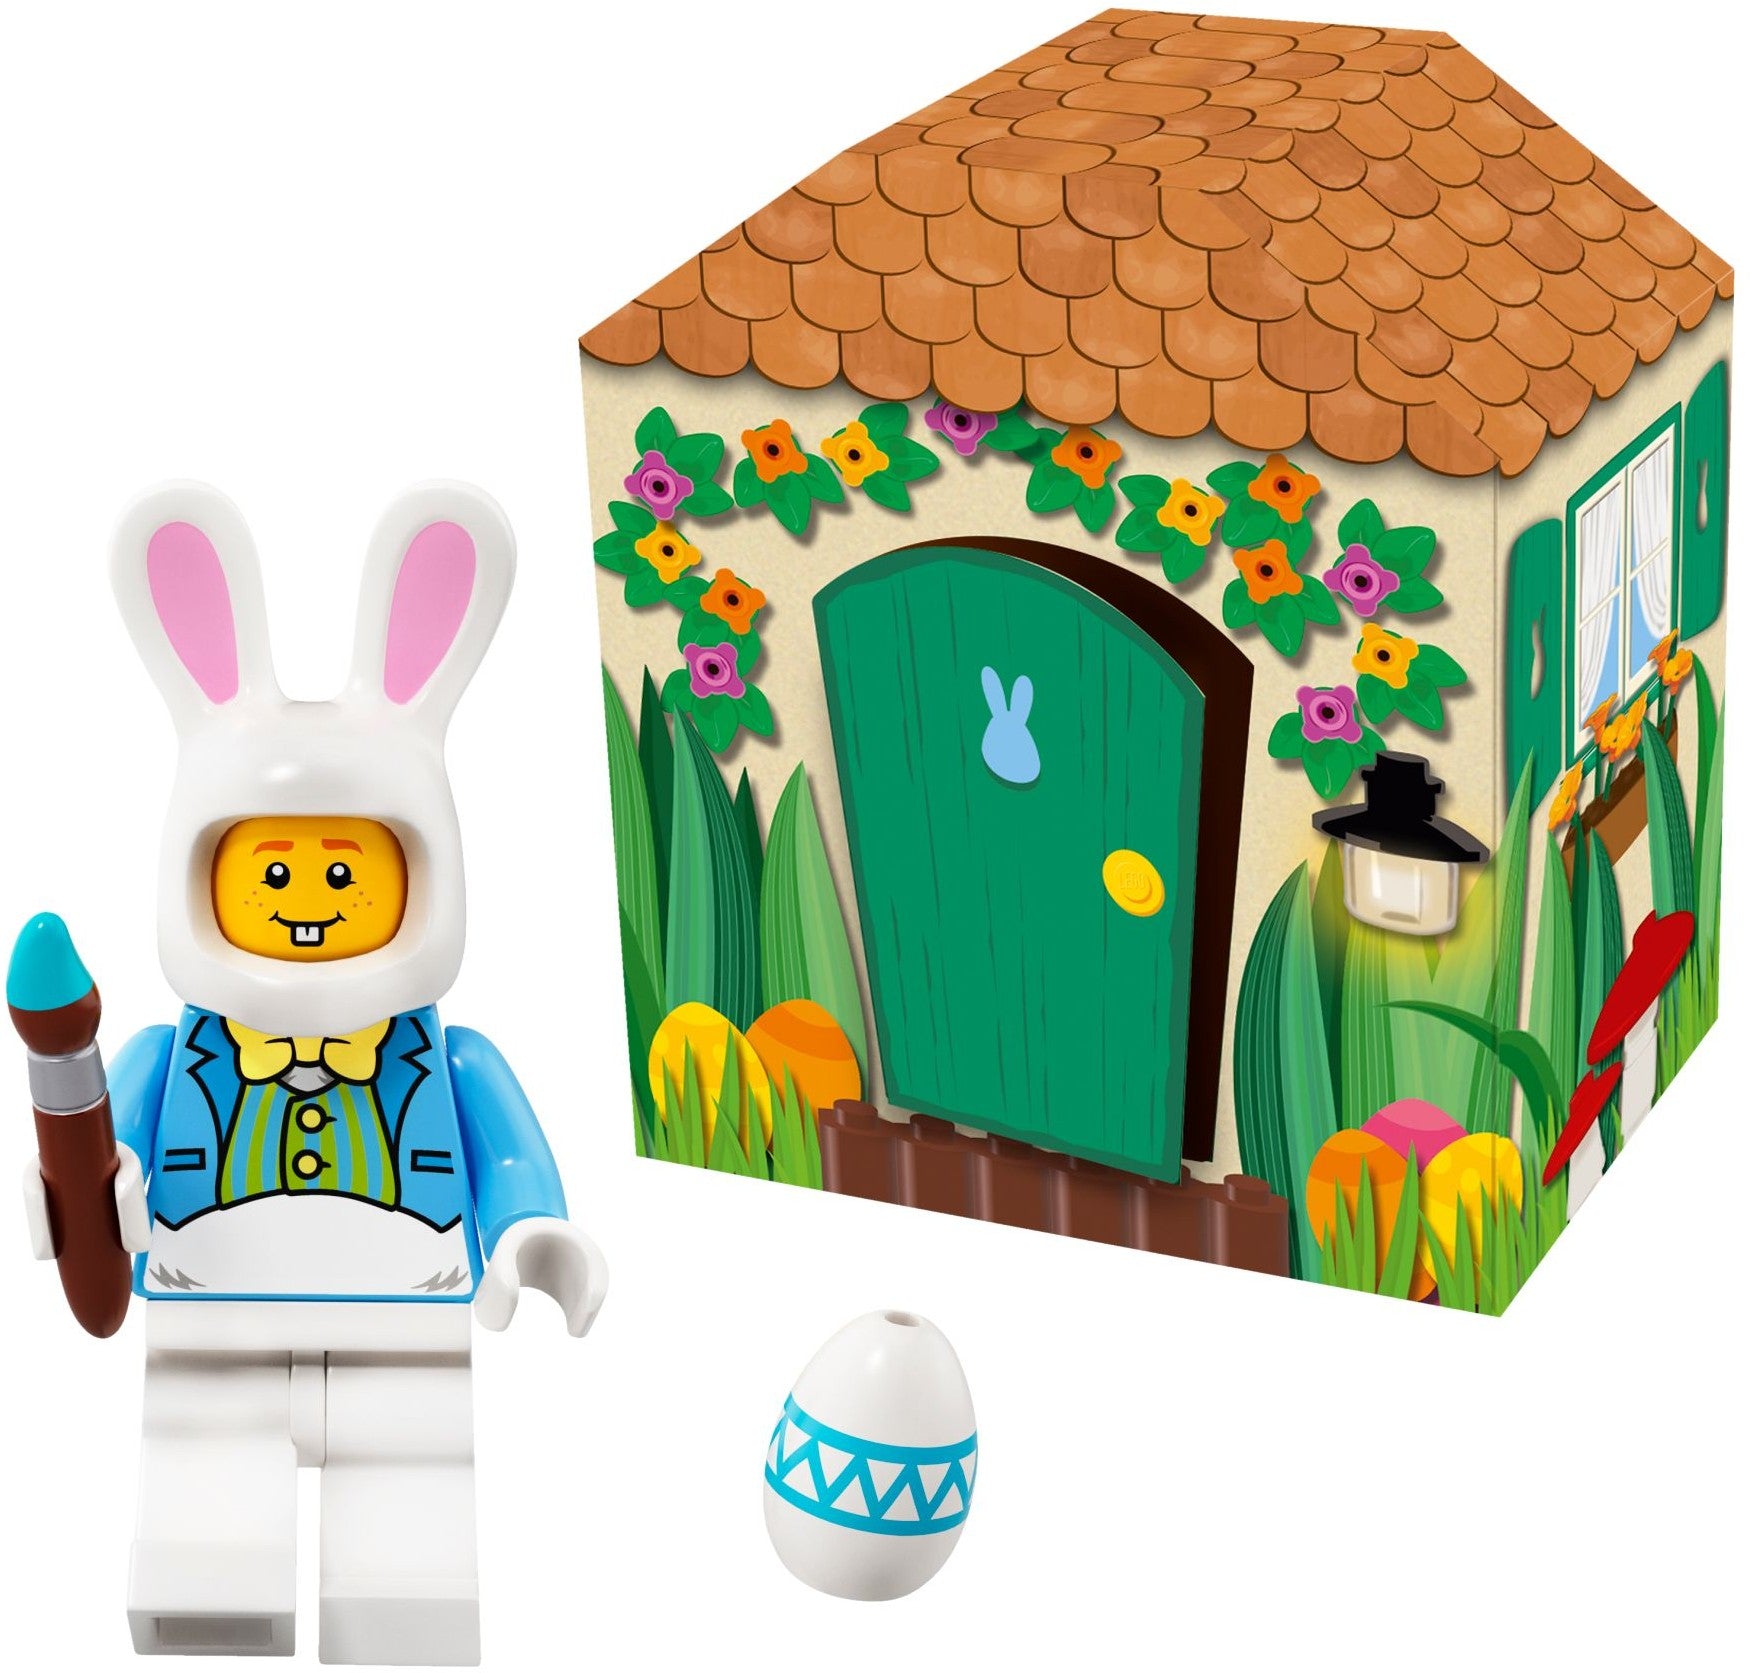 Lego 5005249 - Easter Bunny Hut